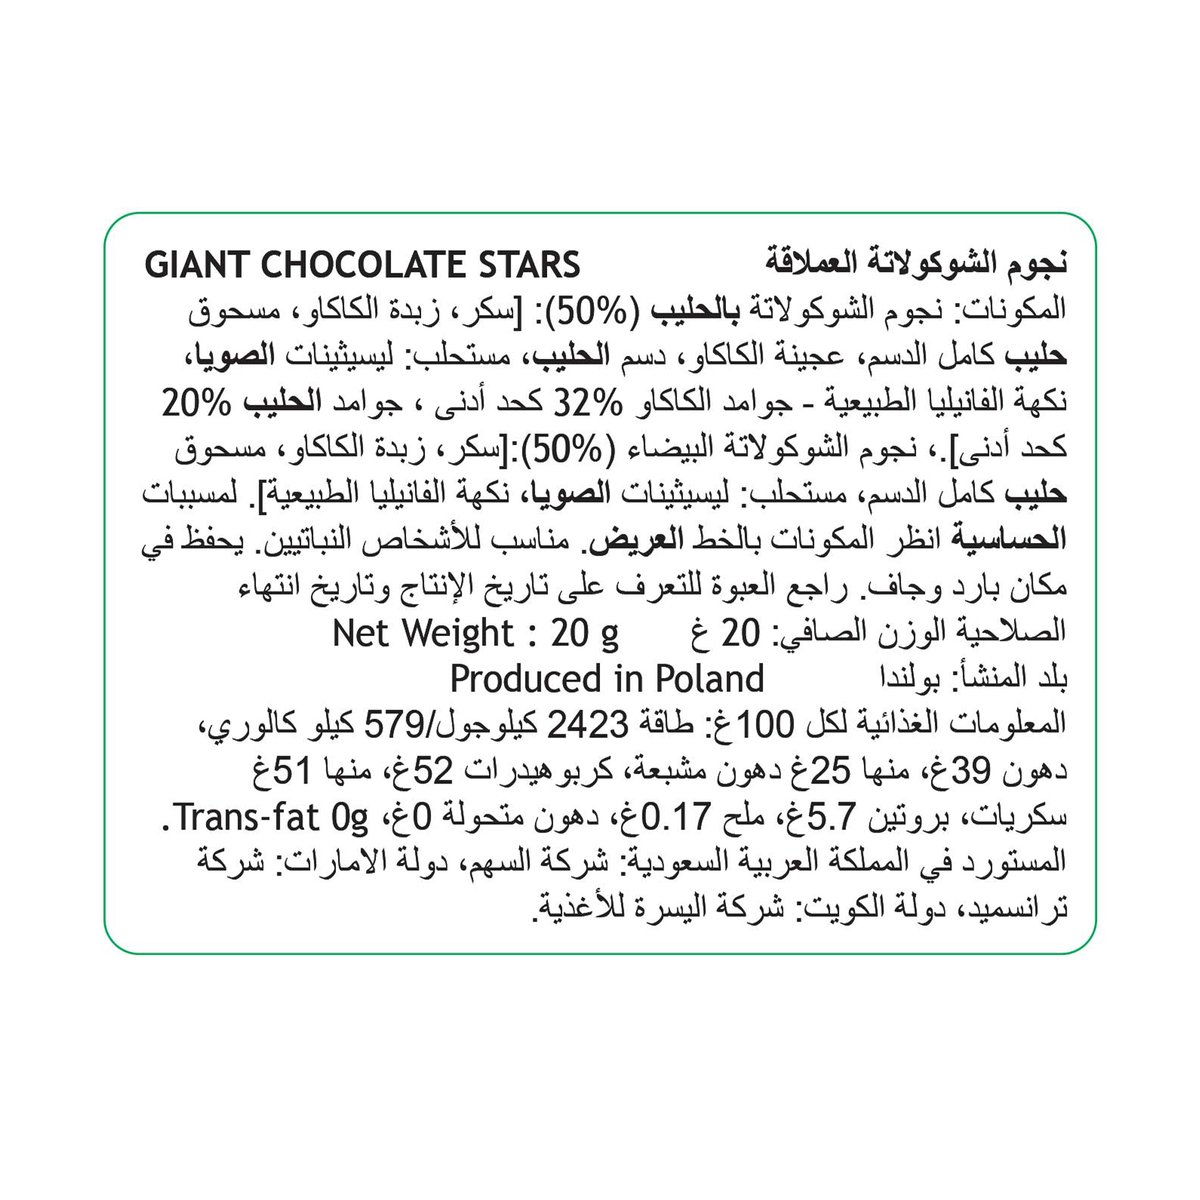 Dr.Oetker Giant White & Milk Chocolate Stars 20g